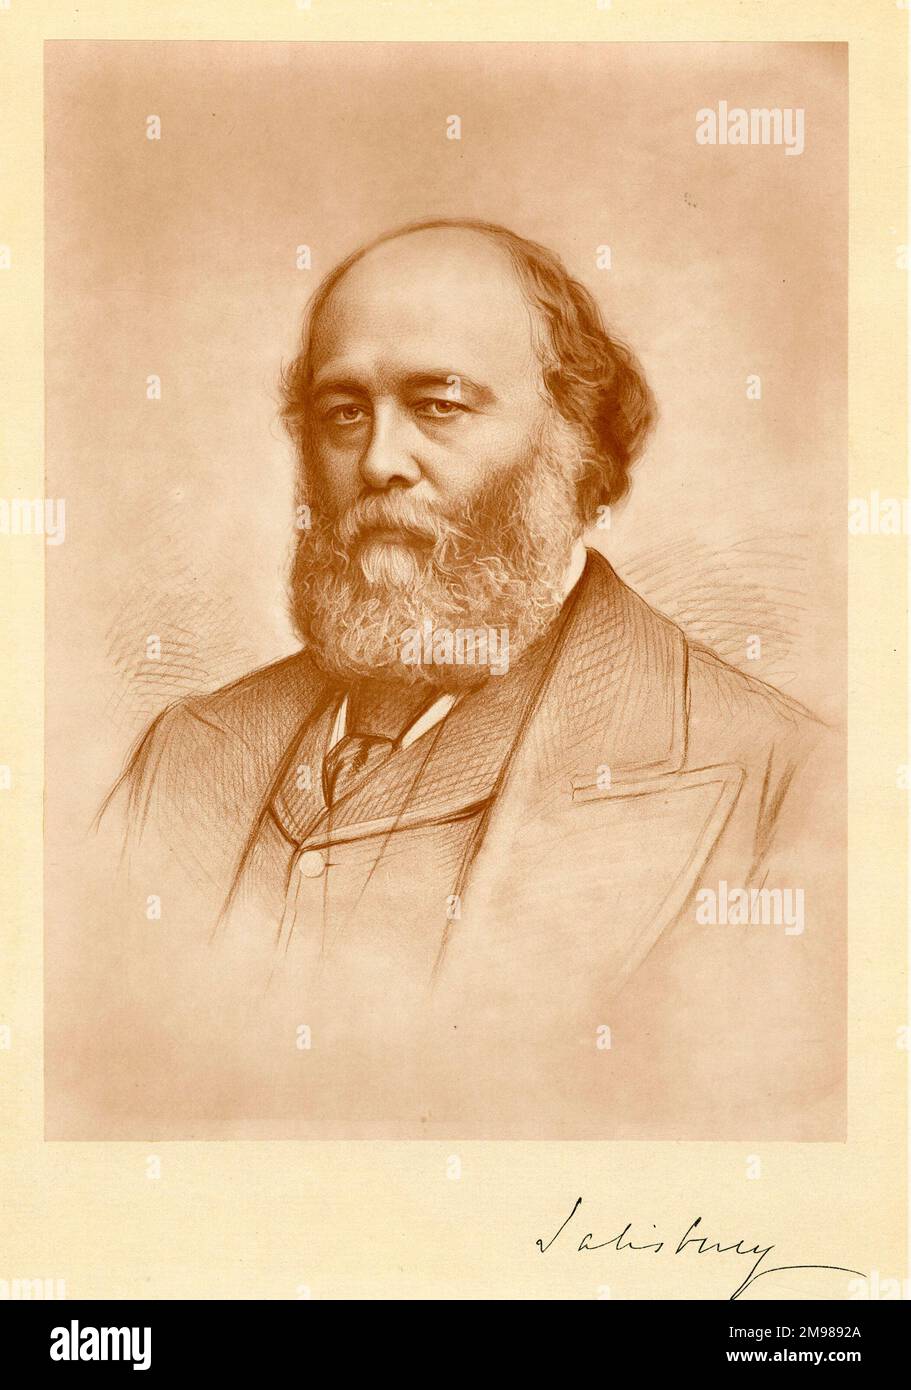 Lord Salisbury (Robert Arthur Talbot Gascoyne-Cecil, 3rd Marquess of Salisbury, 1830-1903), British Prime Minister. Stock Photo